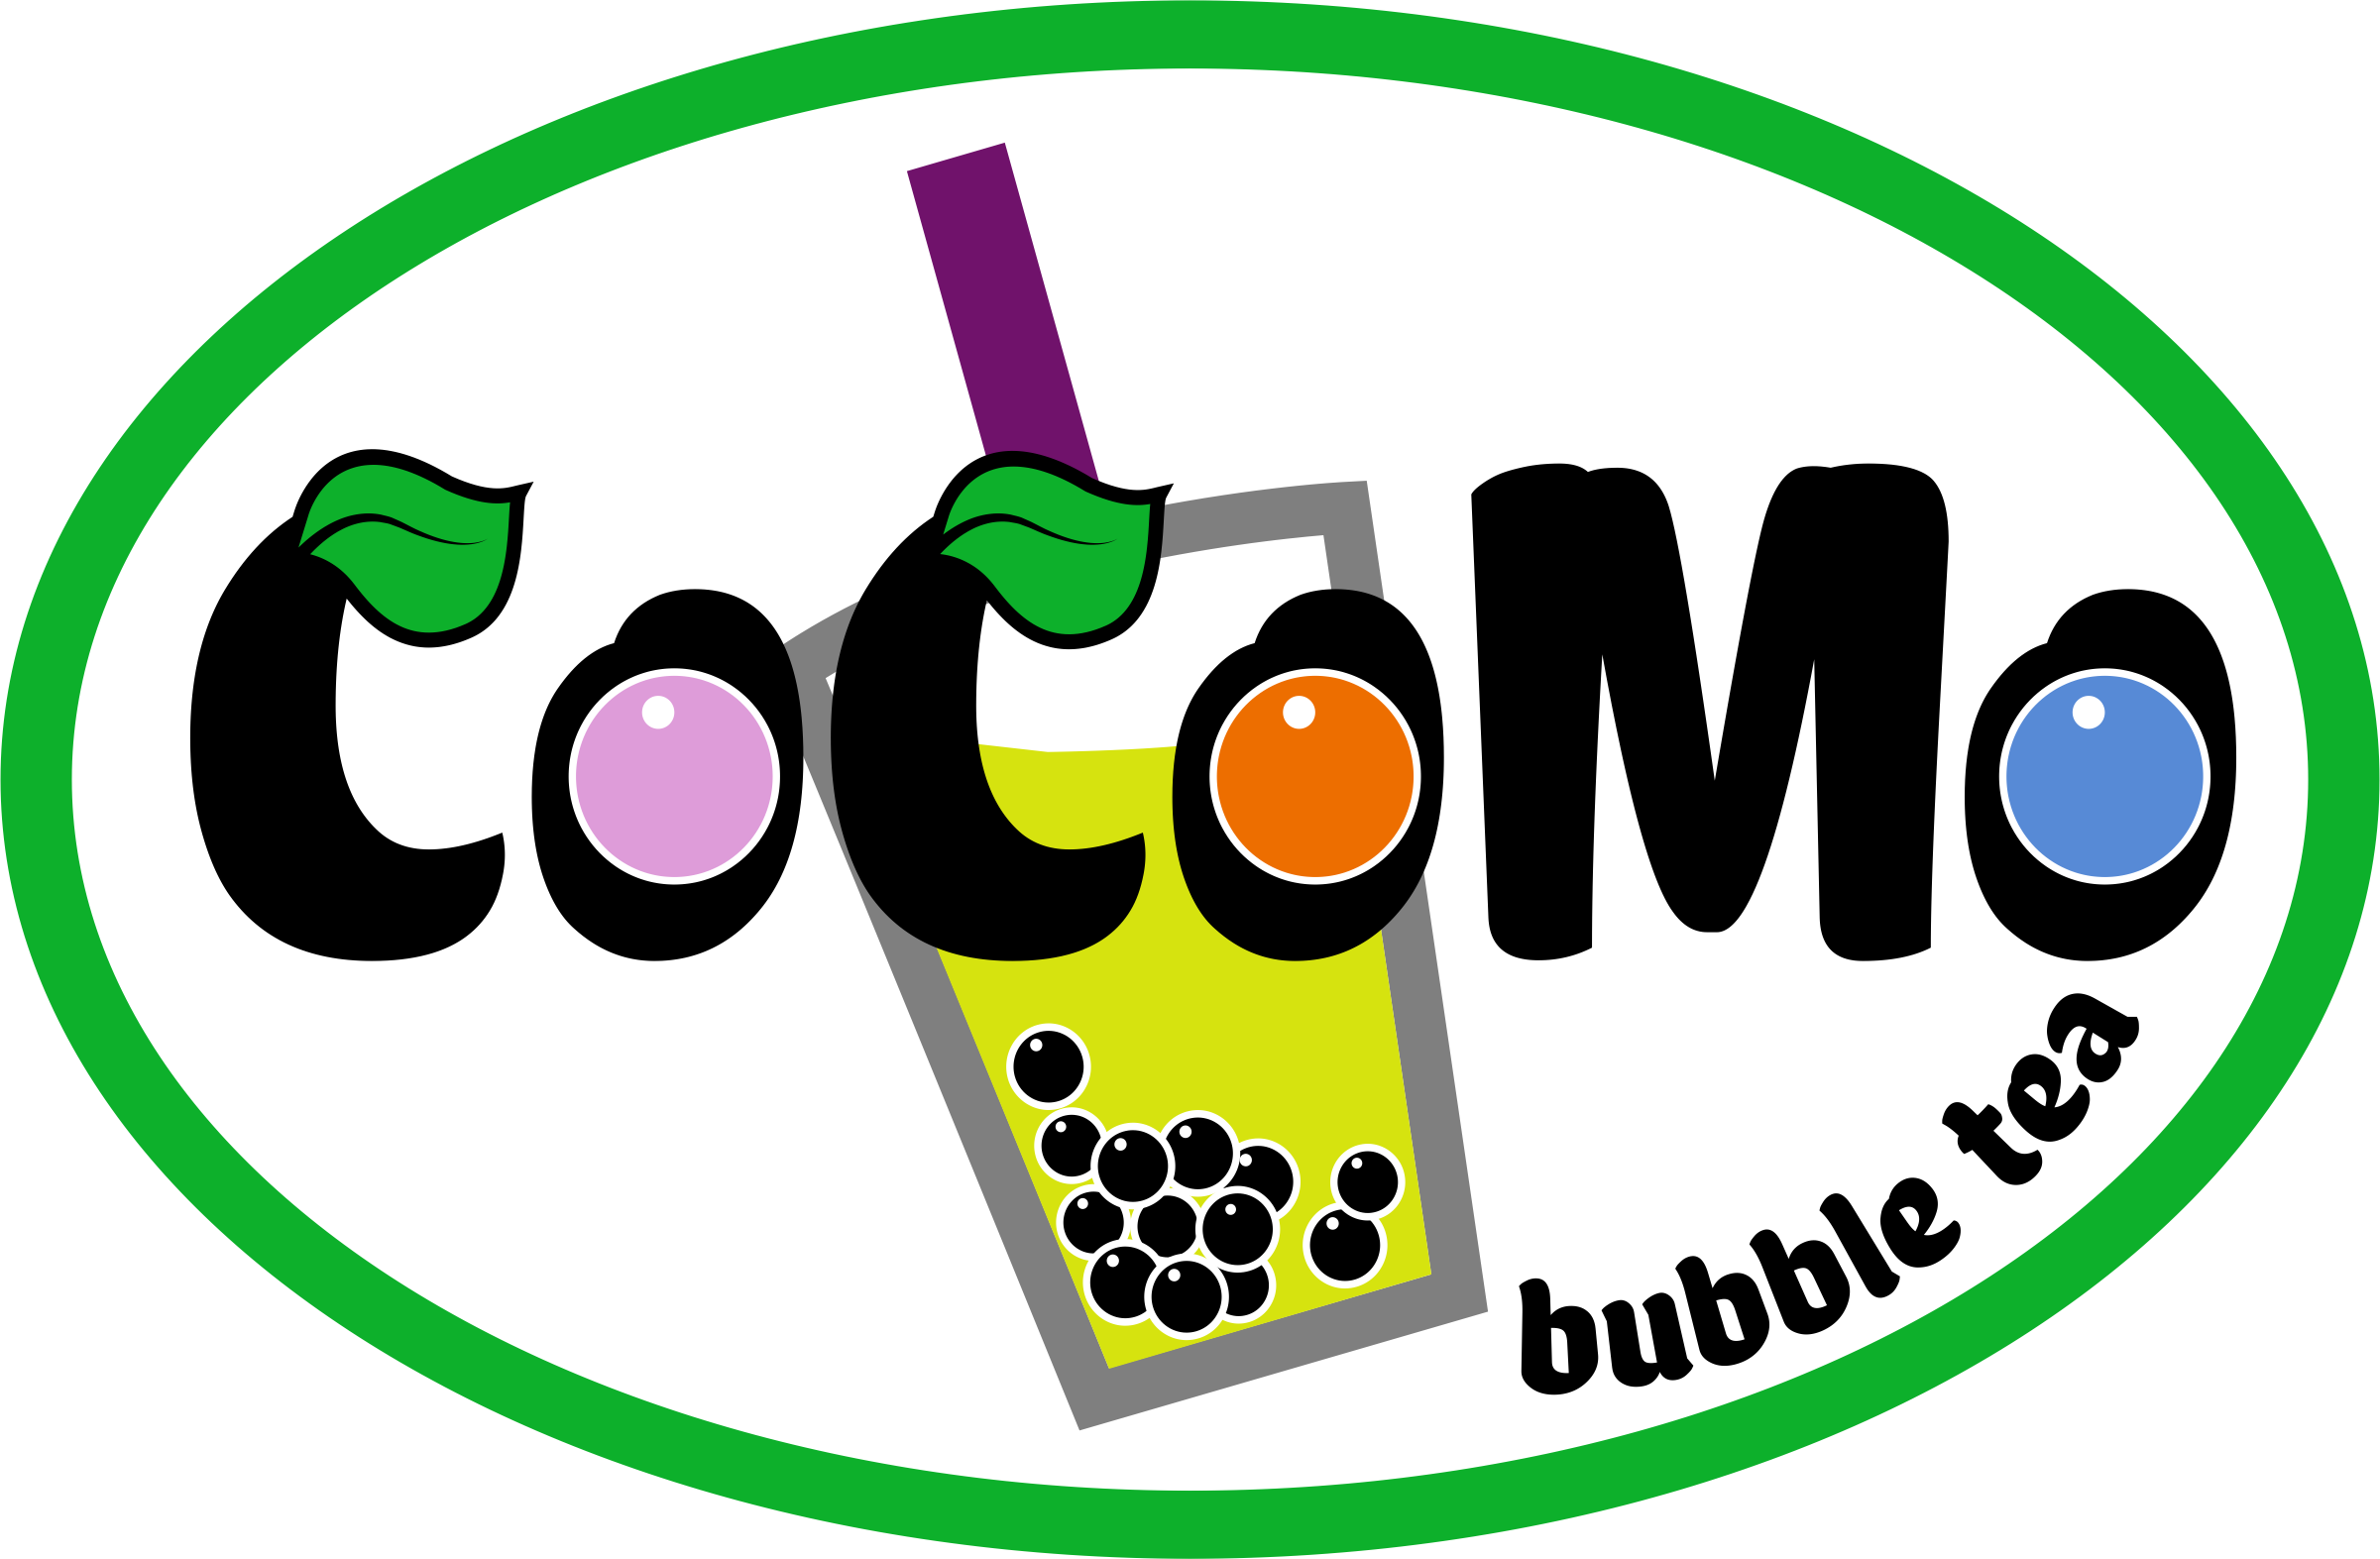 CoCoMo Bubble Tea